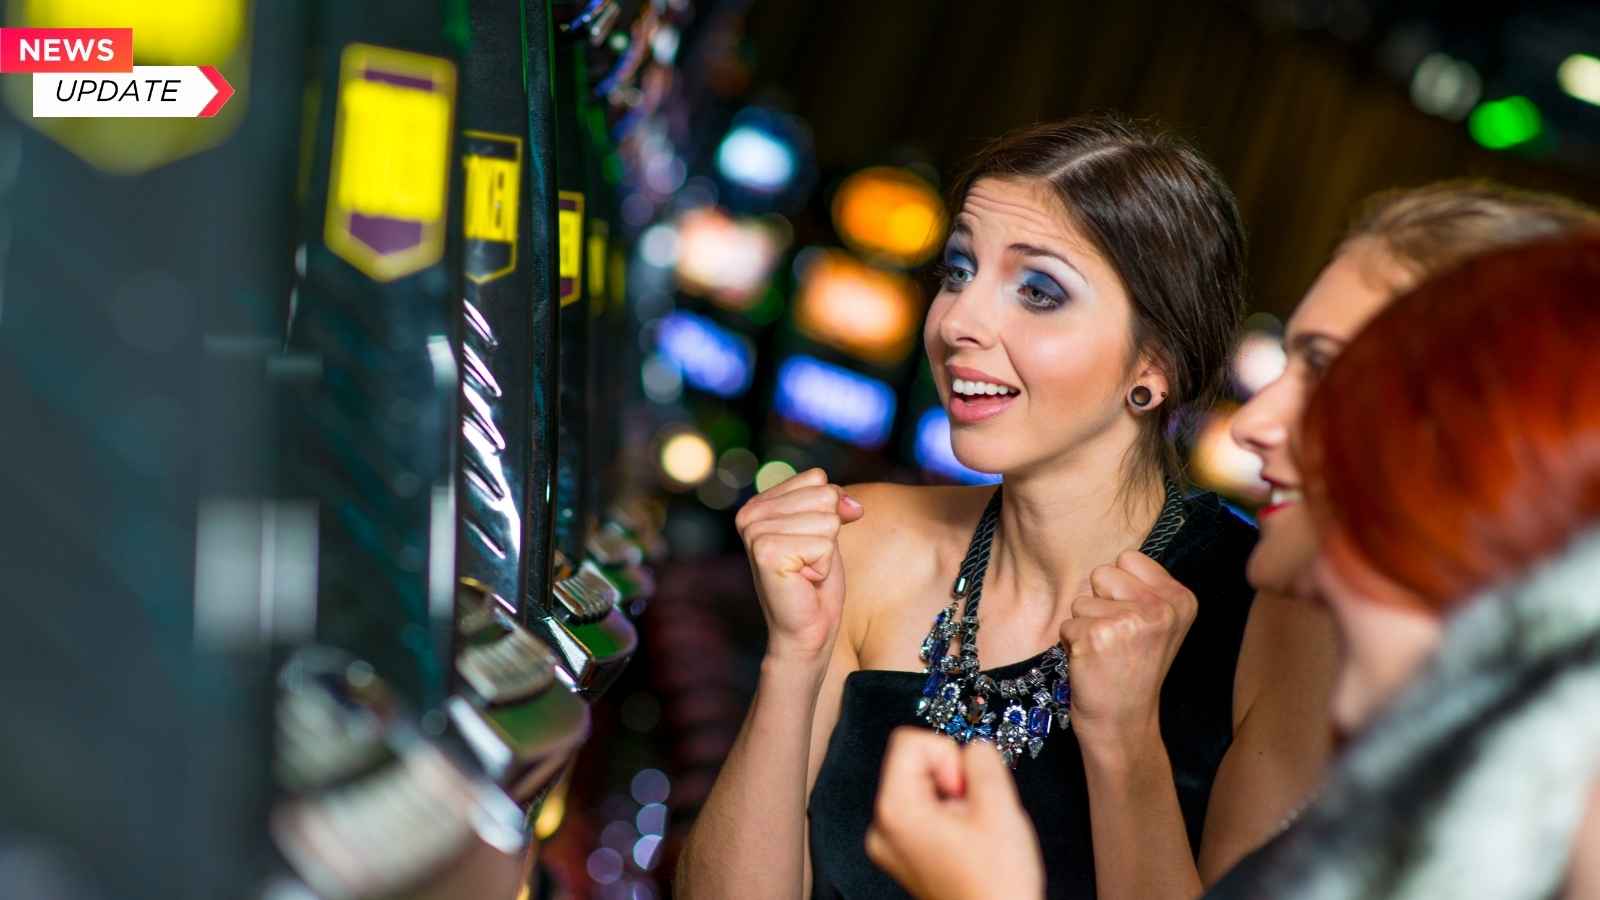 Breaking Stereotypes: Study Exposes Growing Female Fandom for Online Gambling in Brazil